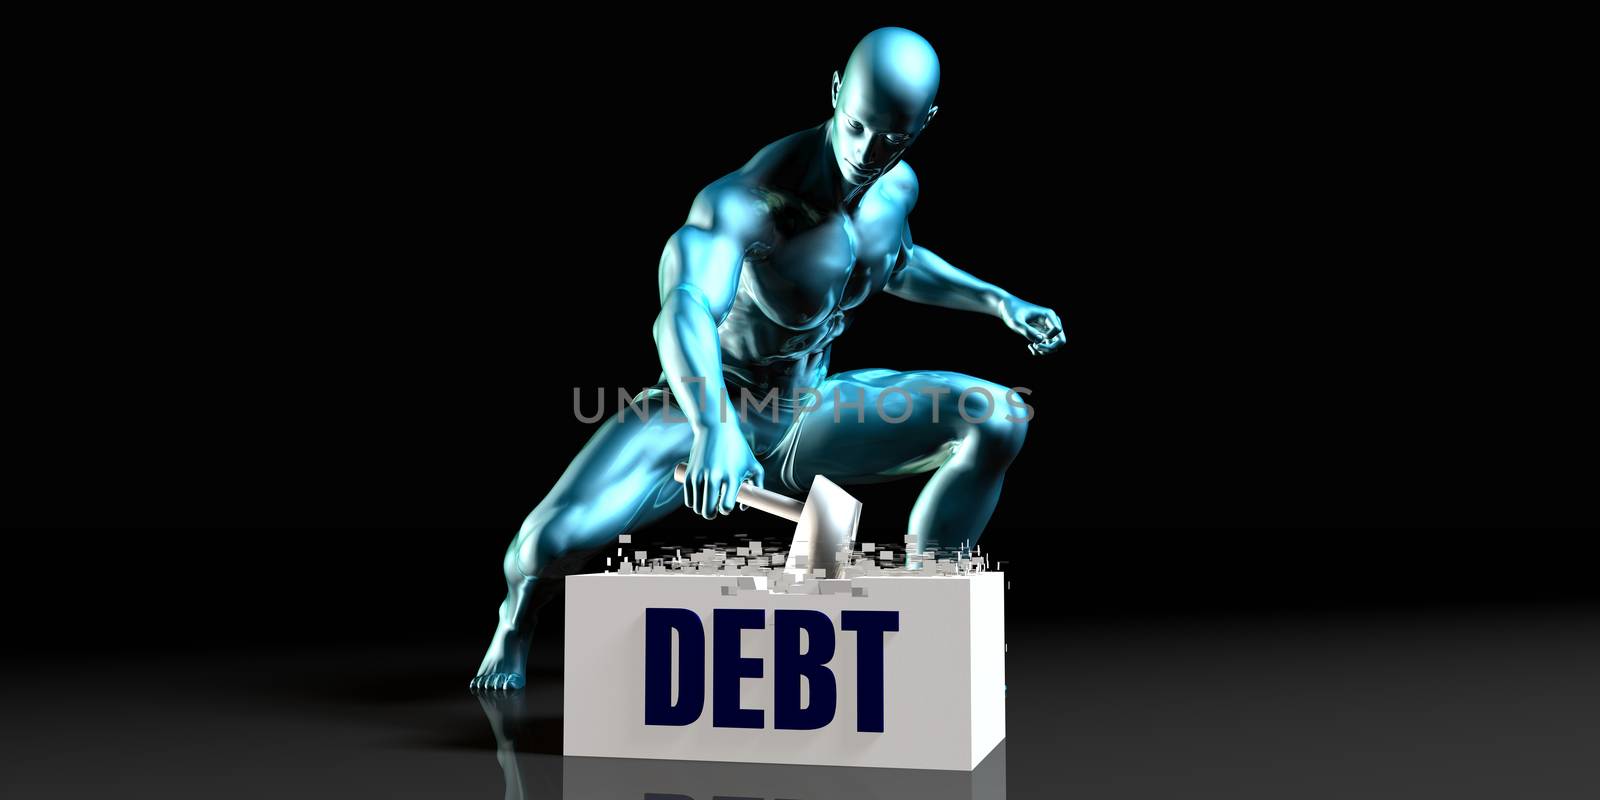 Get Rid of Debt by kentoh